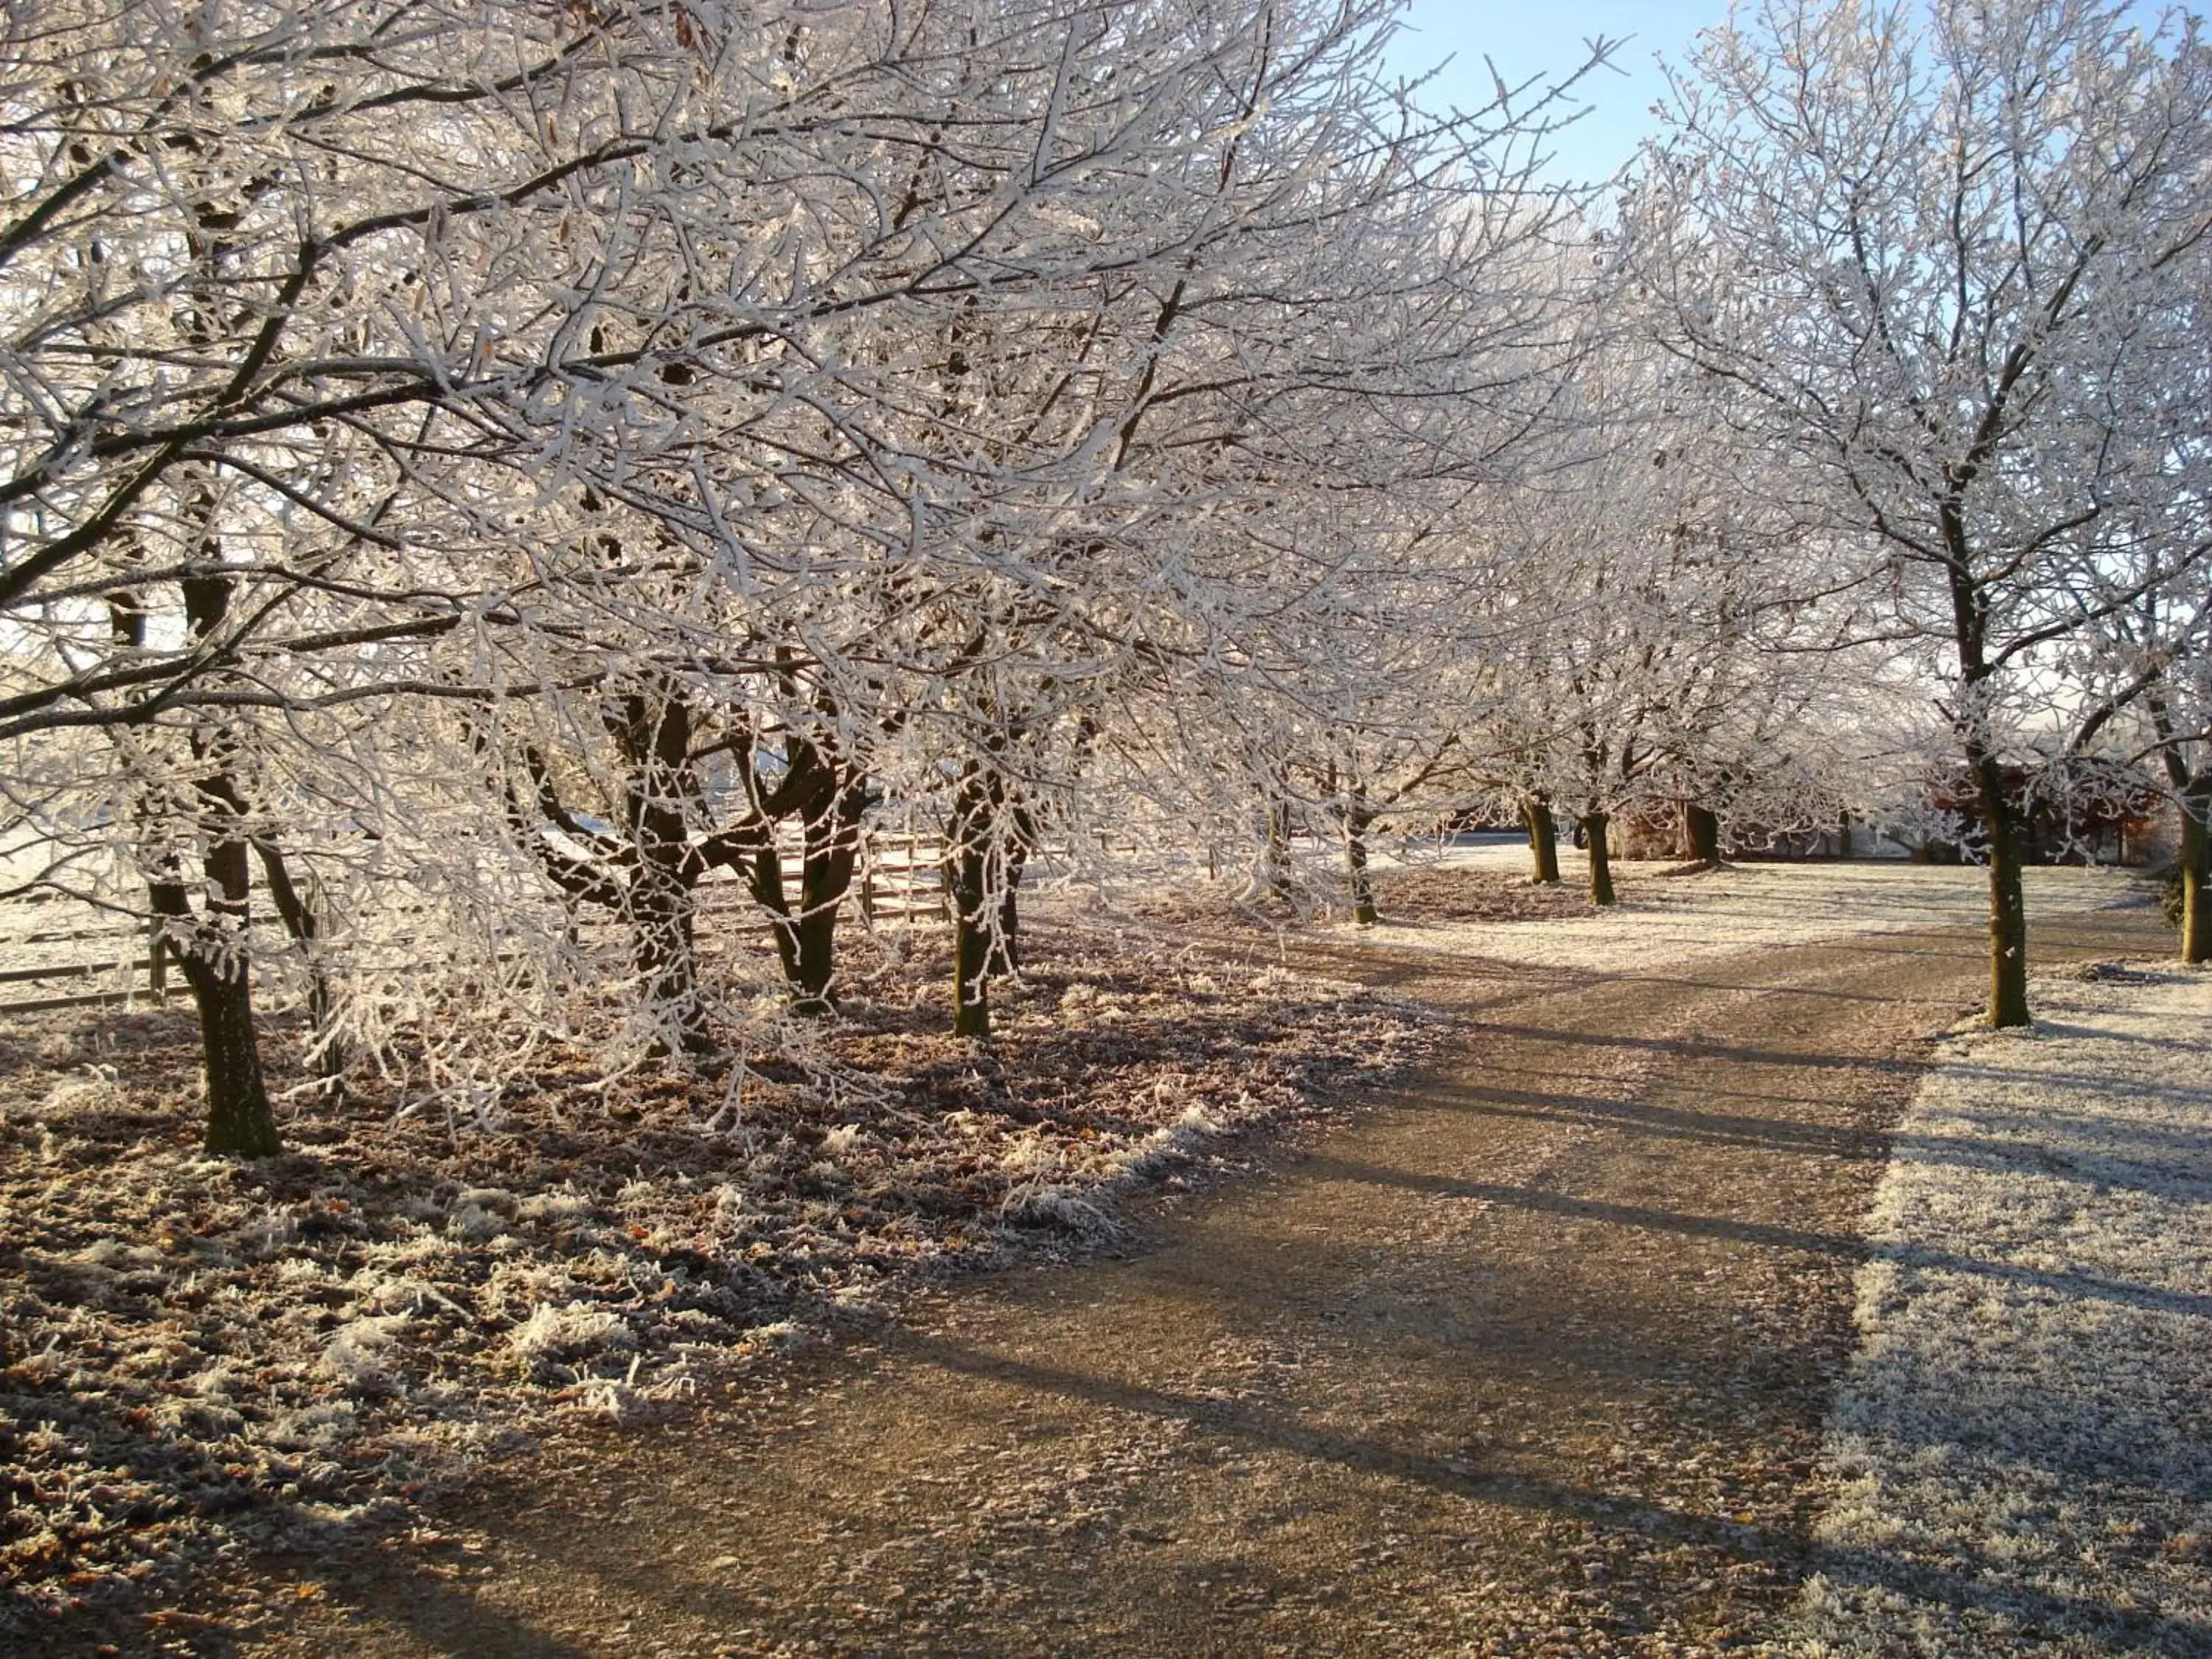 Winter in Weston Hill Farm